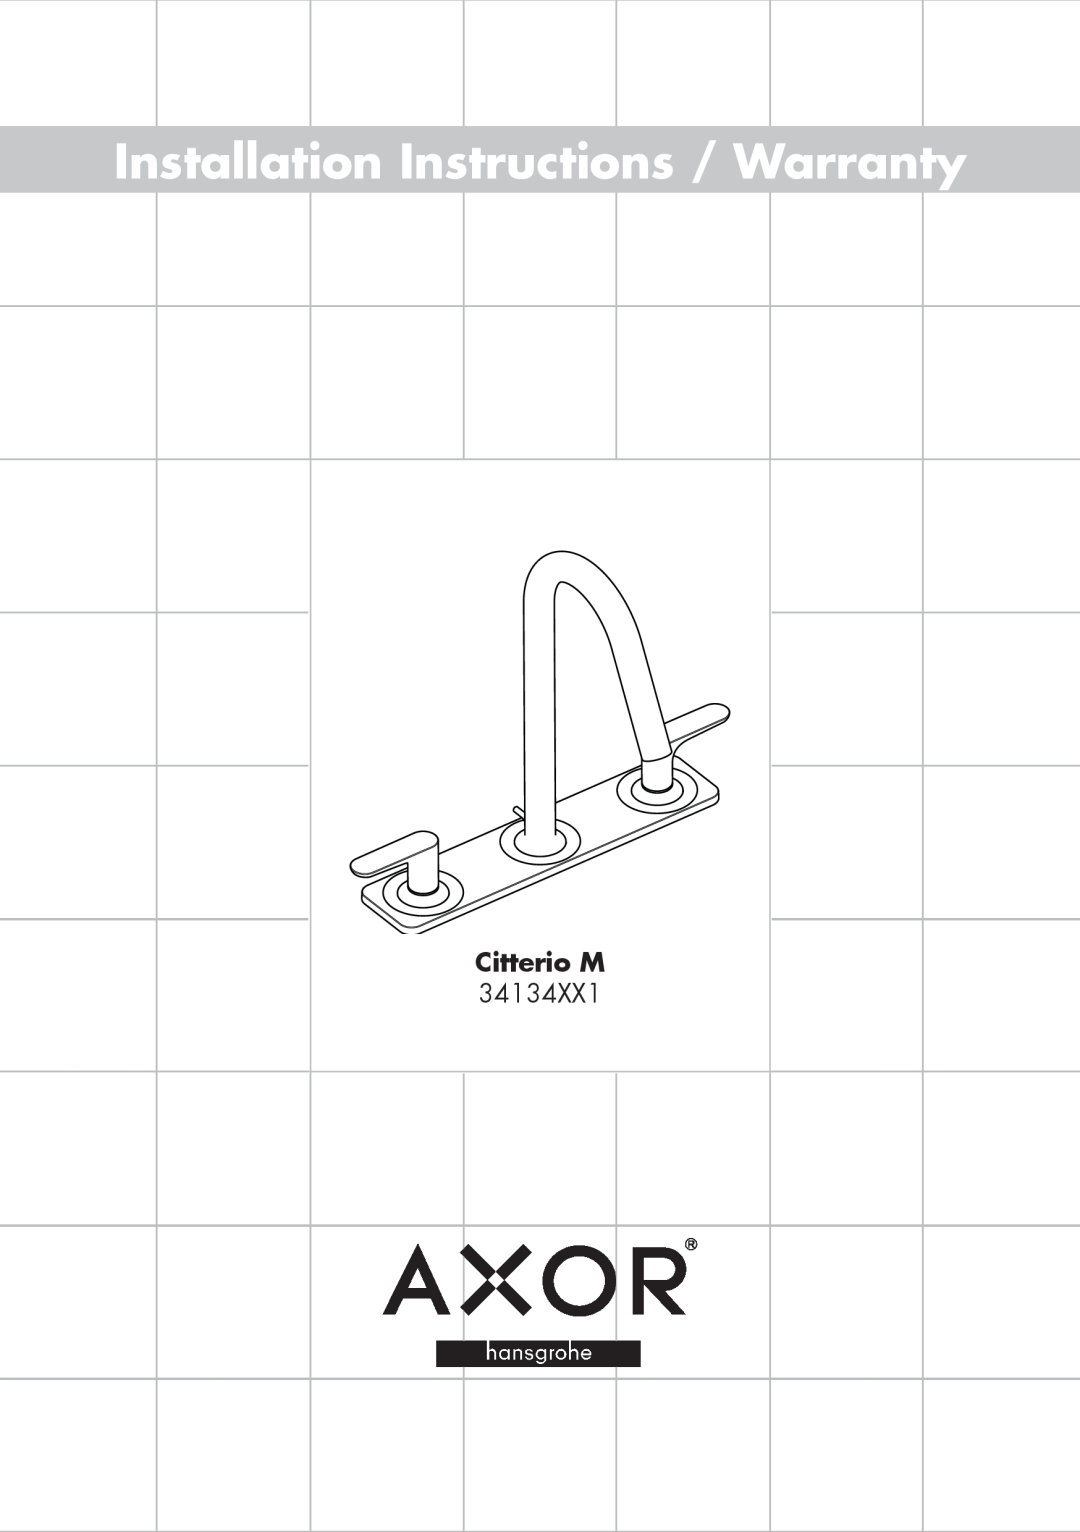 Axor 34134XX1 installation instructions Citterio M, Installation Instructions / Warranty 